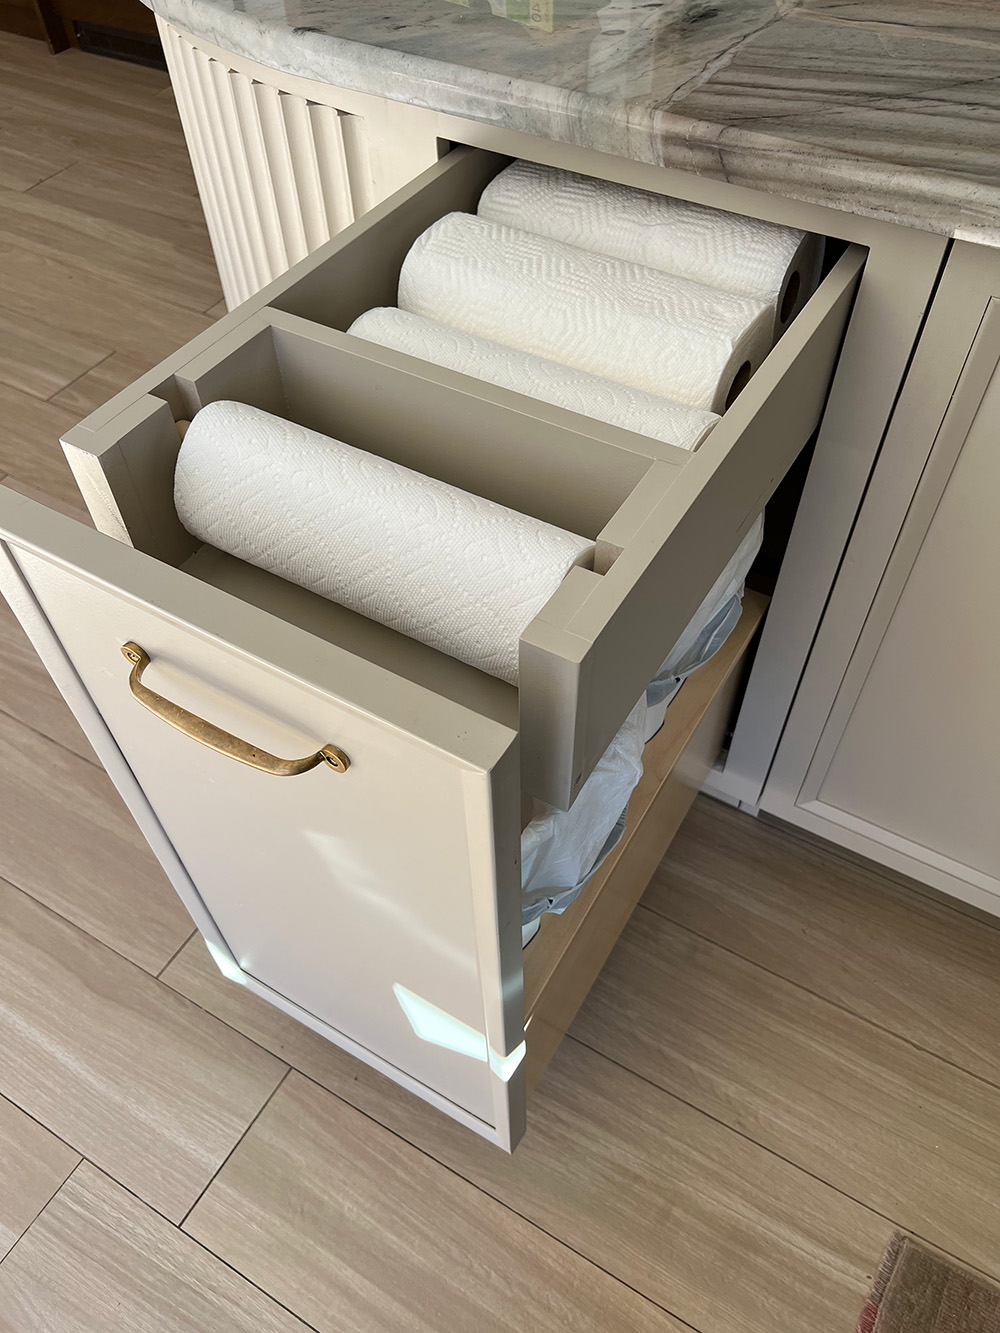 Paper towel hidden in pull drawer  Kitchen room design, Paper towel storage,  Kitchen cabinet design